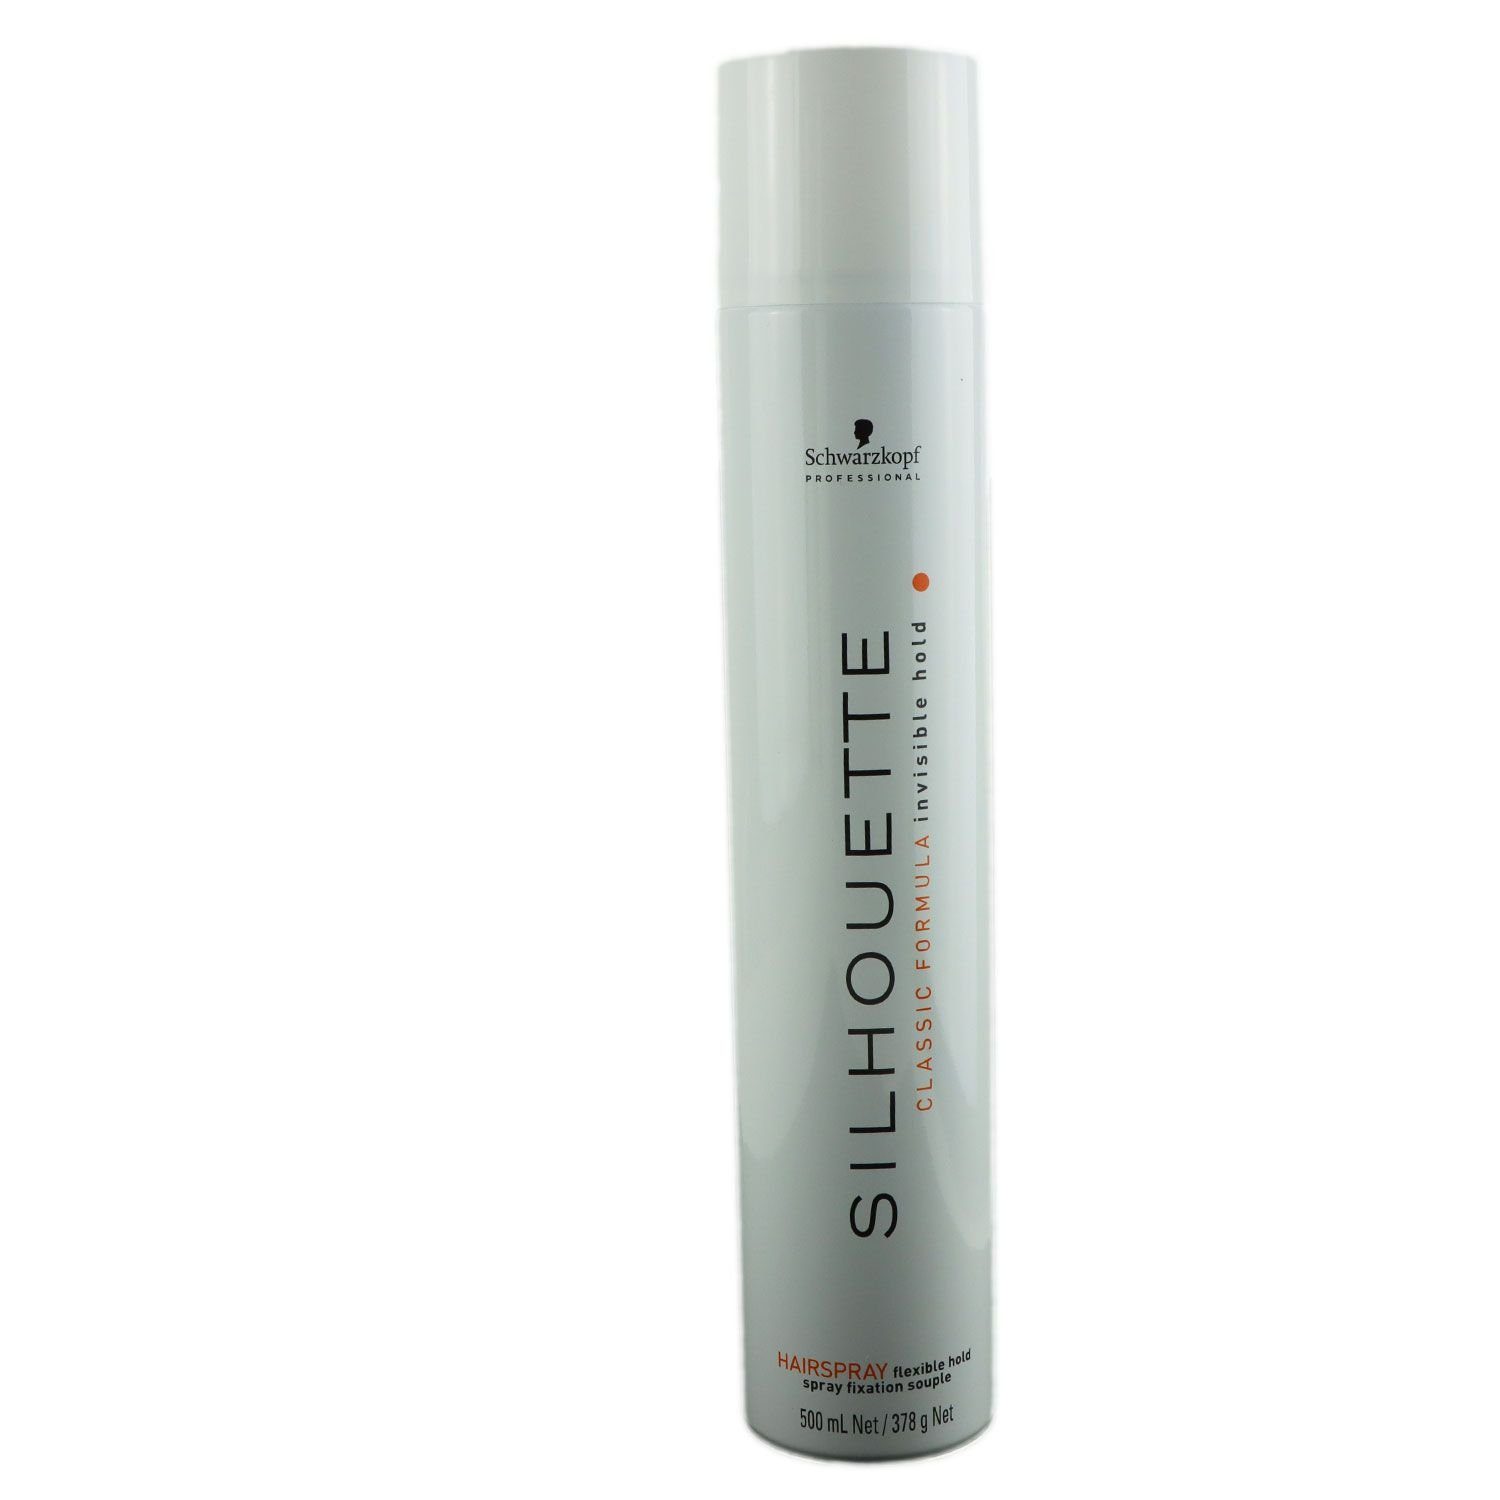 Silhouette 500 ml Haarspray Haarspray Flexible Schwarzkopf